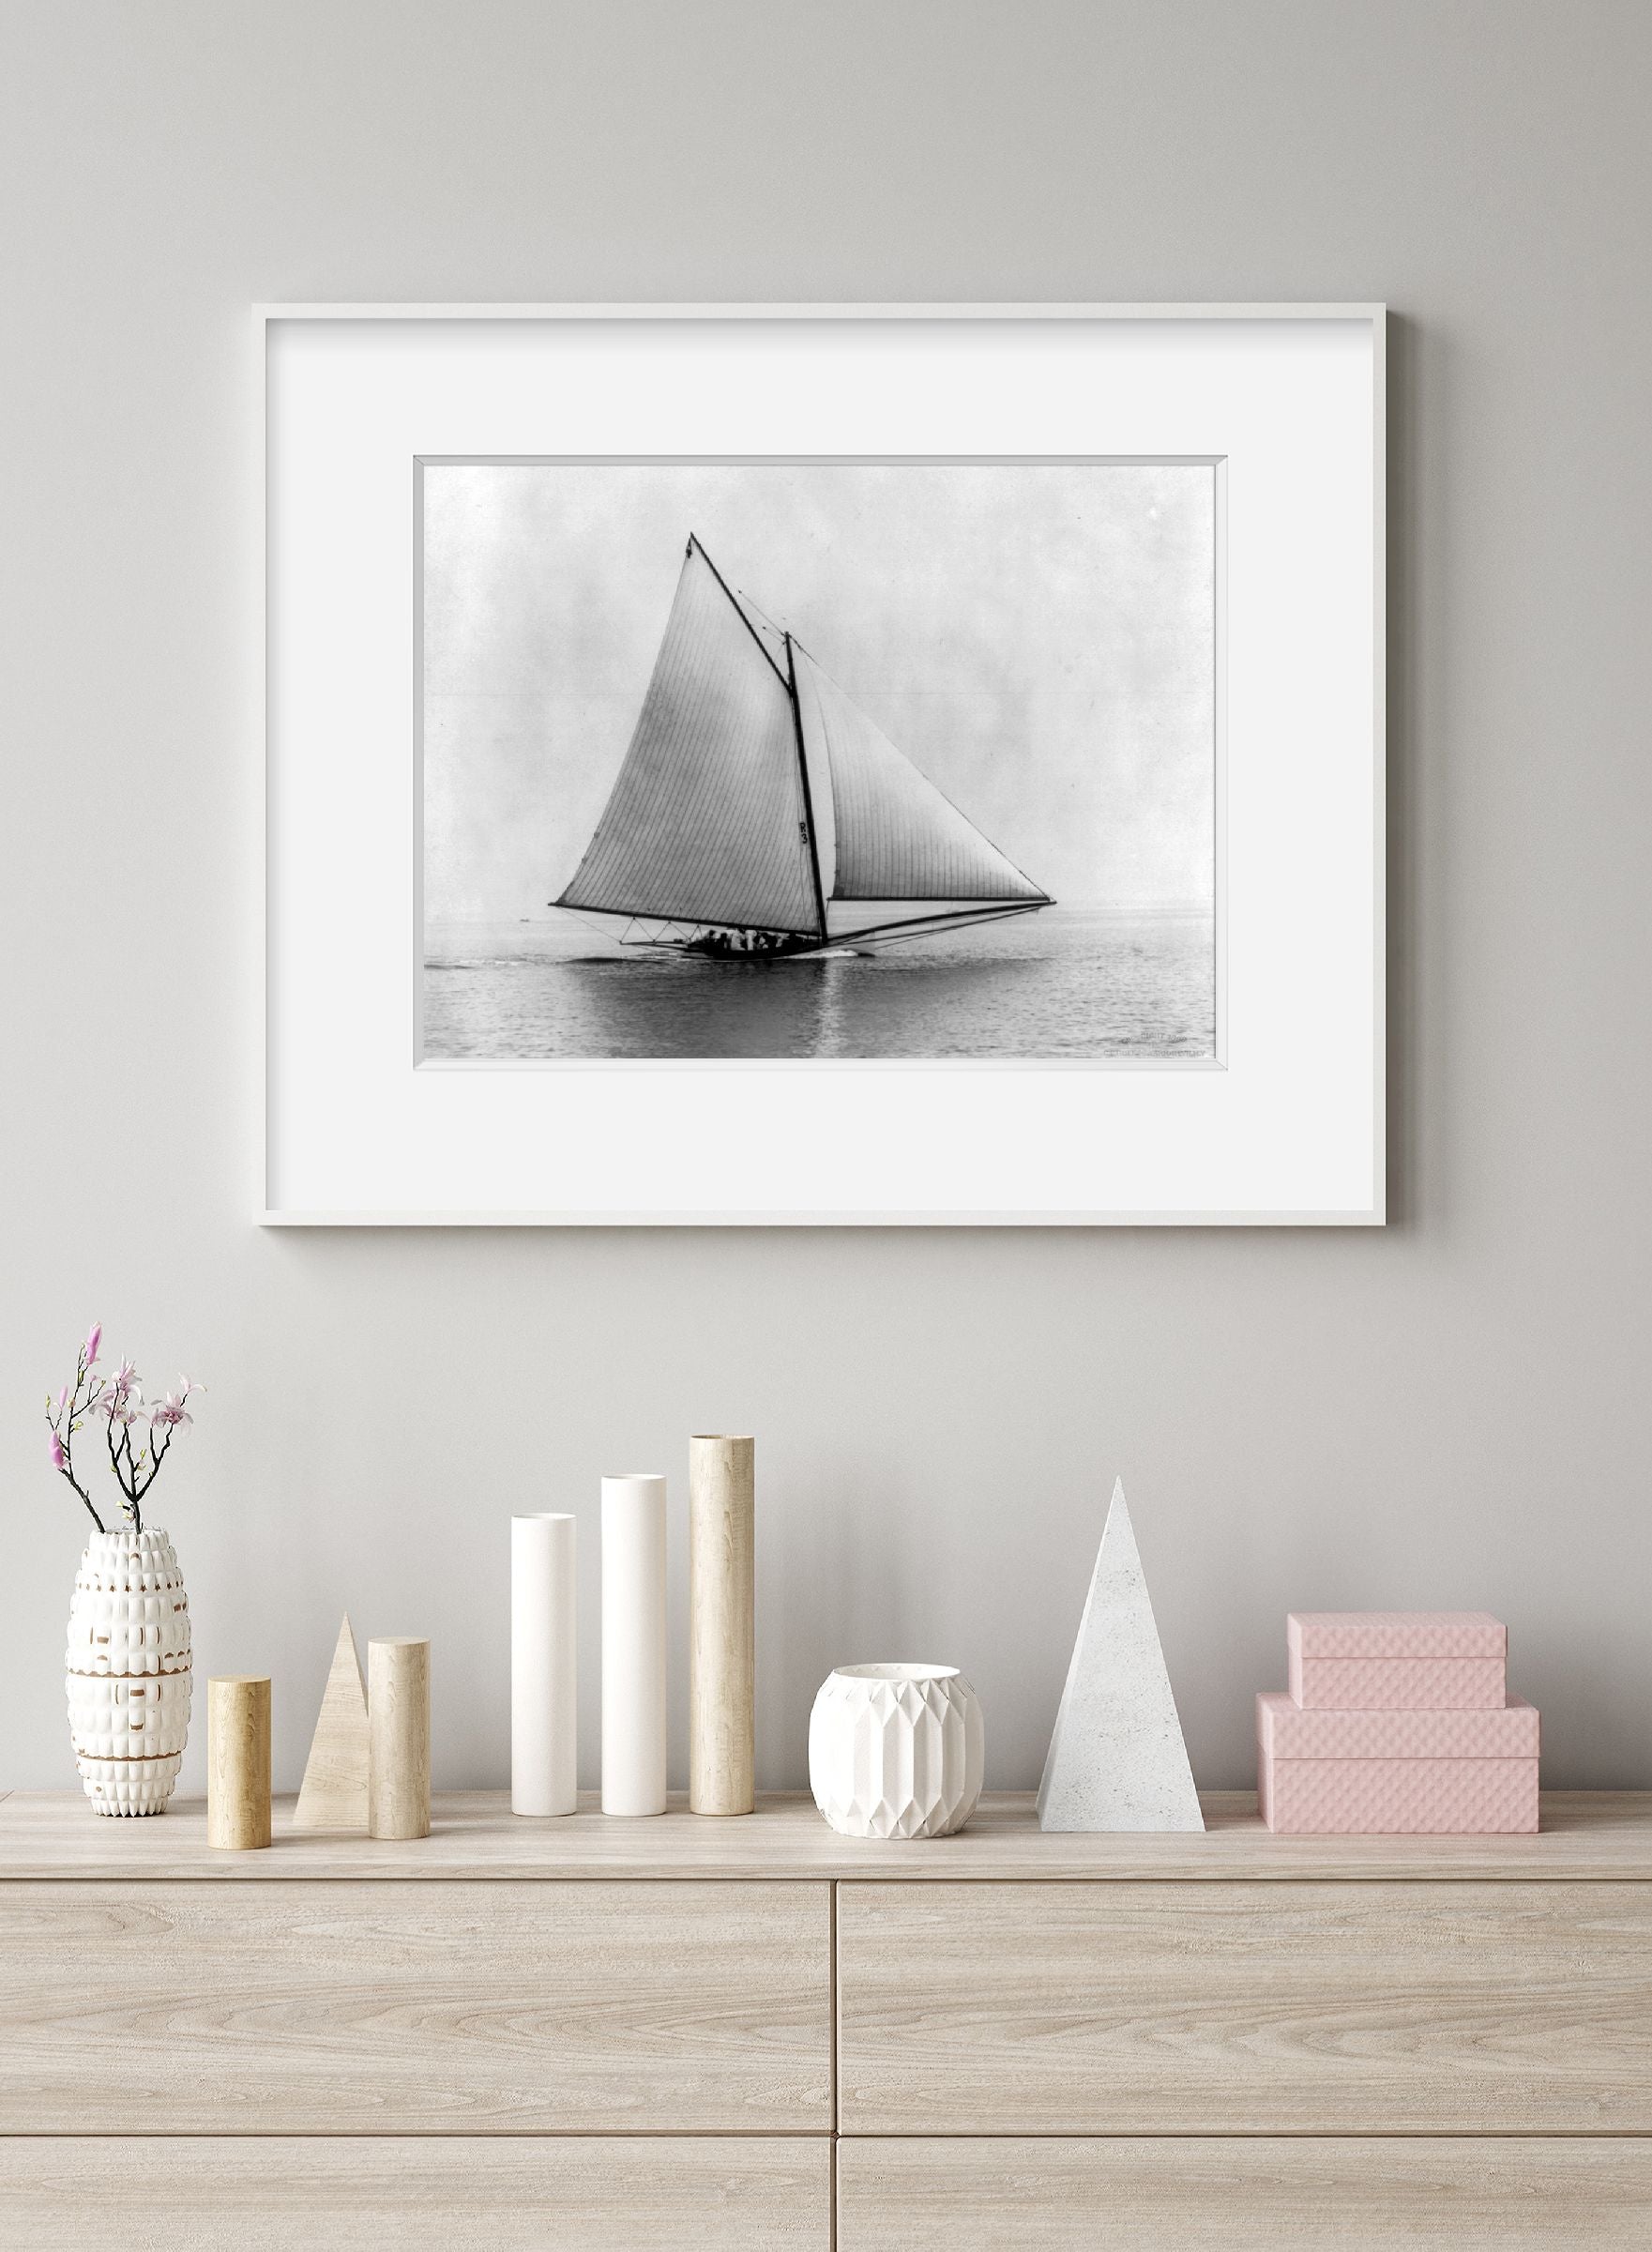 Photo: E.Z. SLOAT, broadside, boat, sail, ship, c1899